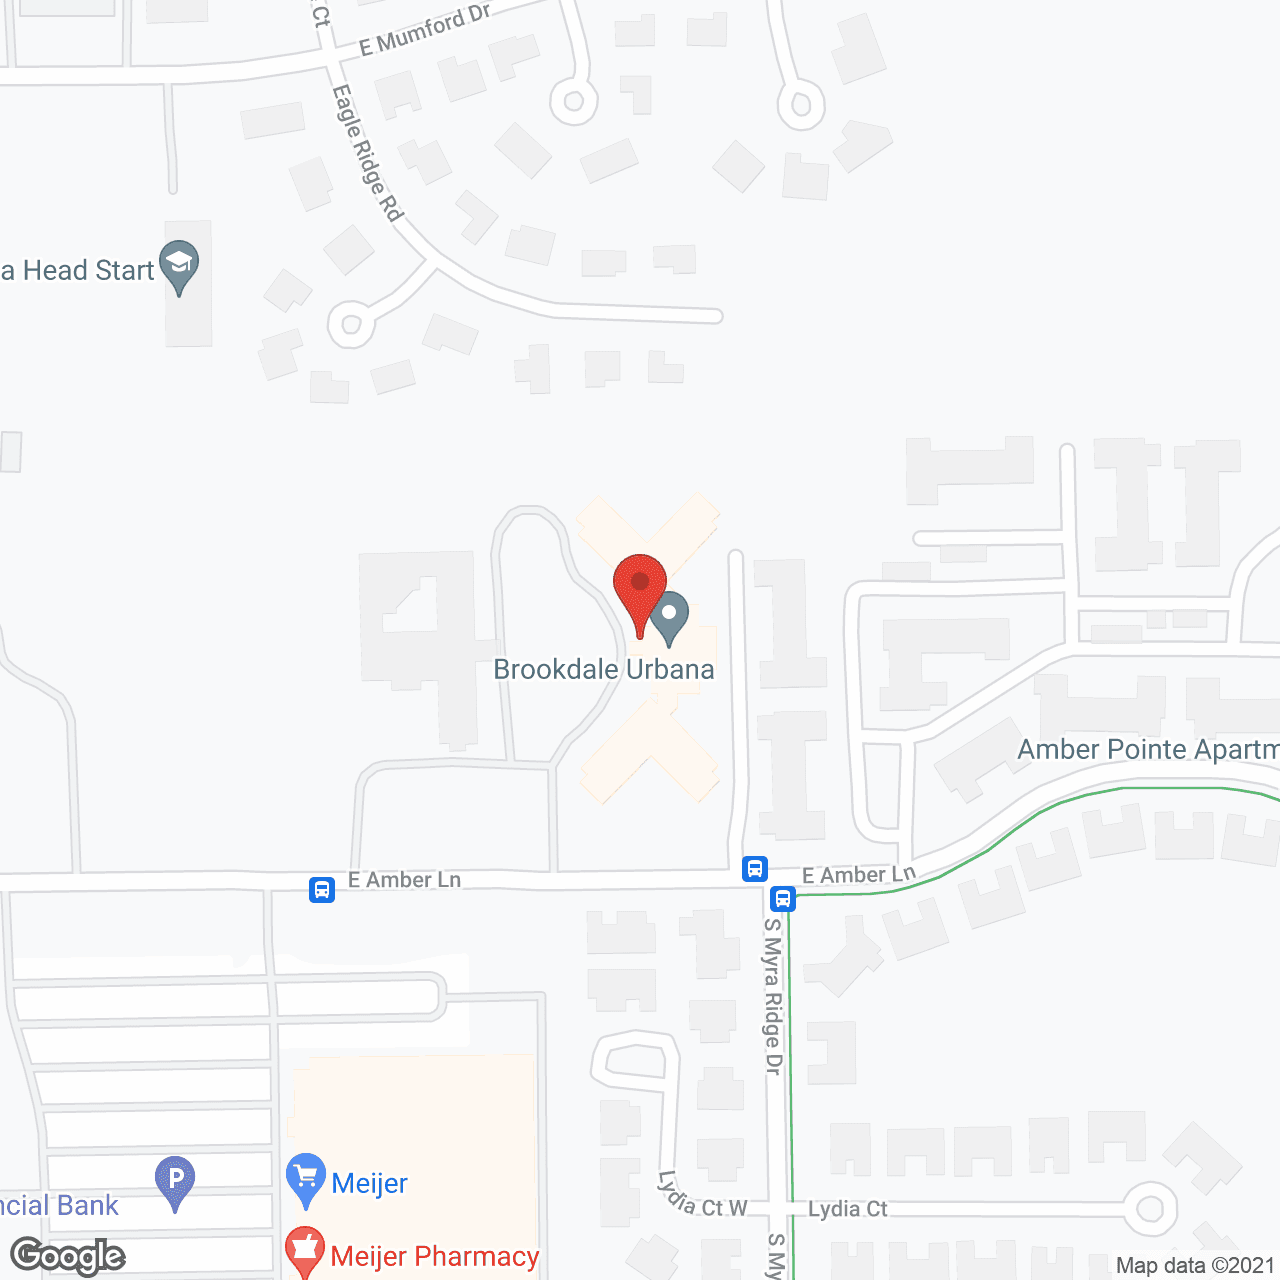 Brookdale Urbana in google map